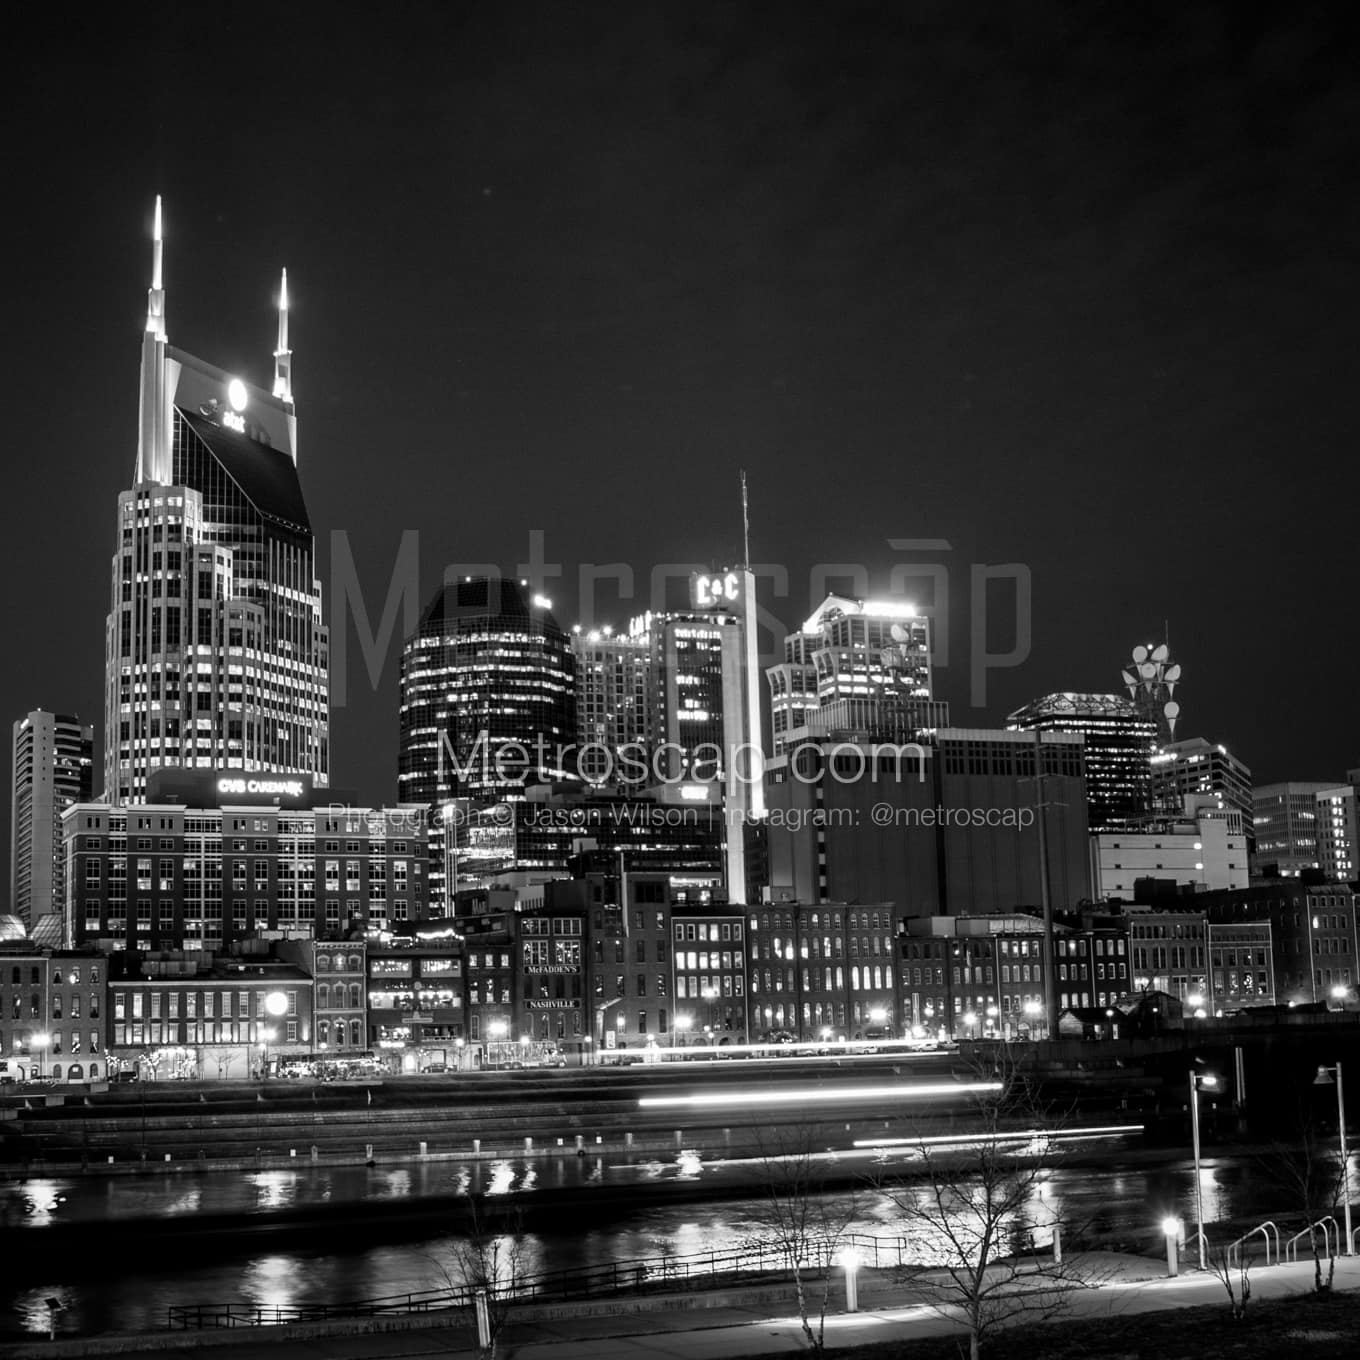 Nashville Black & White Landscape Photography